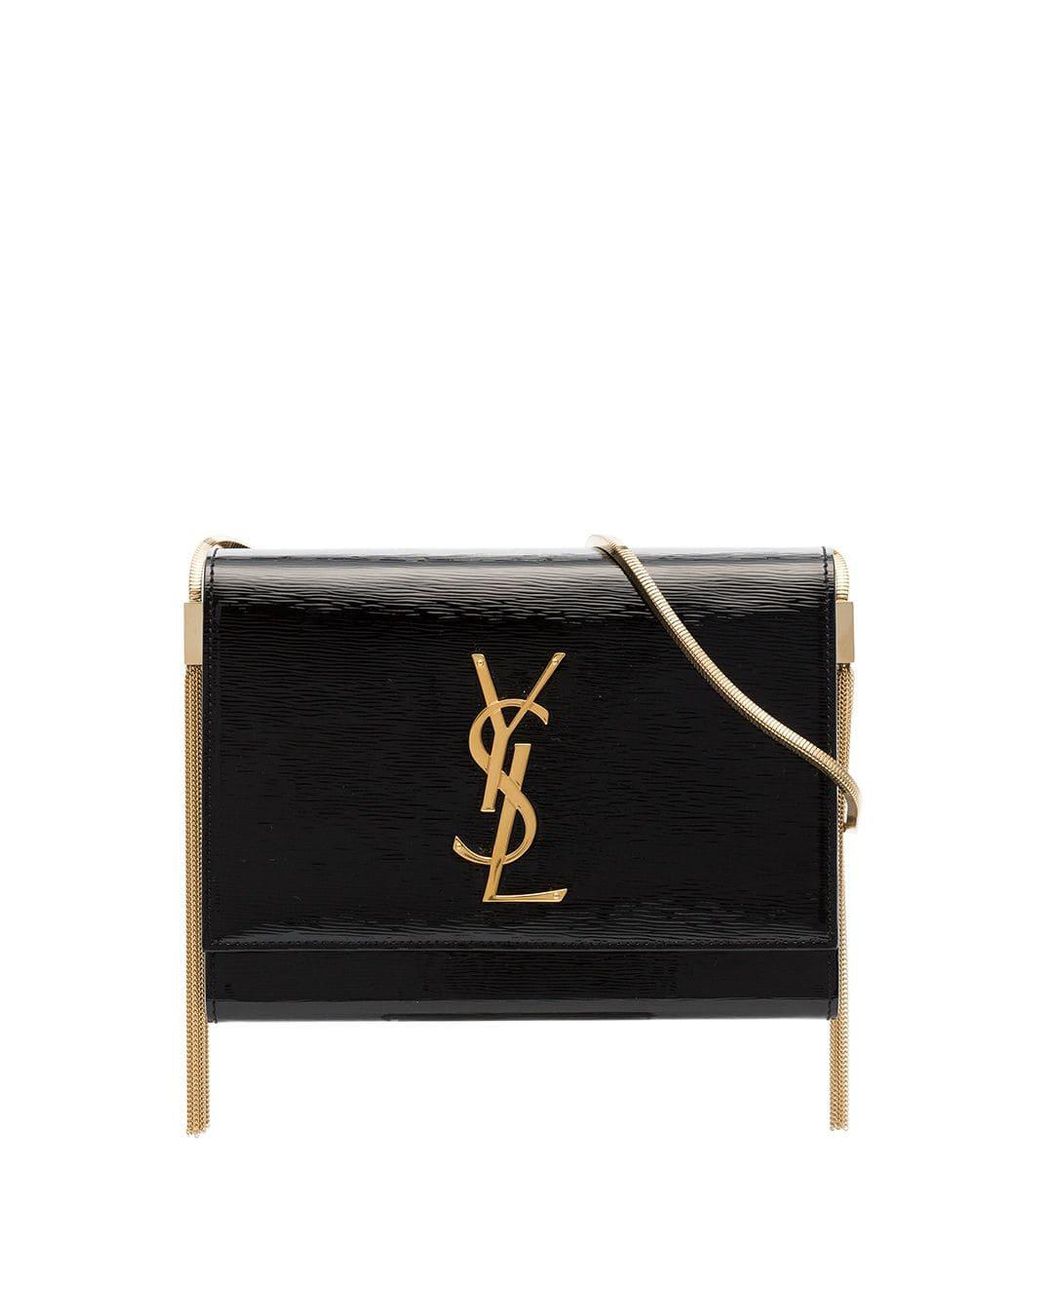 Saint Laurent Kate Box Shoulder Bag in Black | Lyst